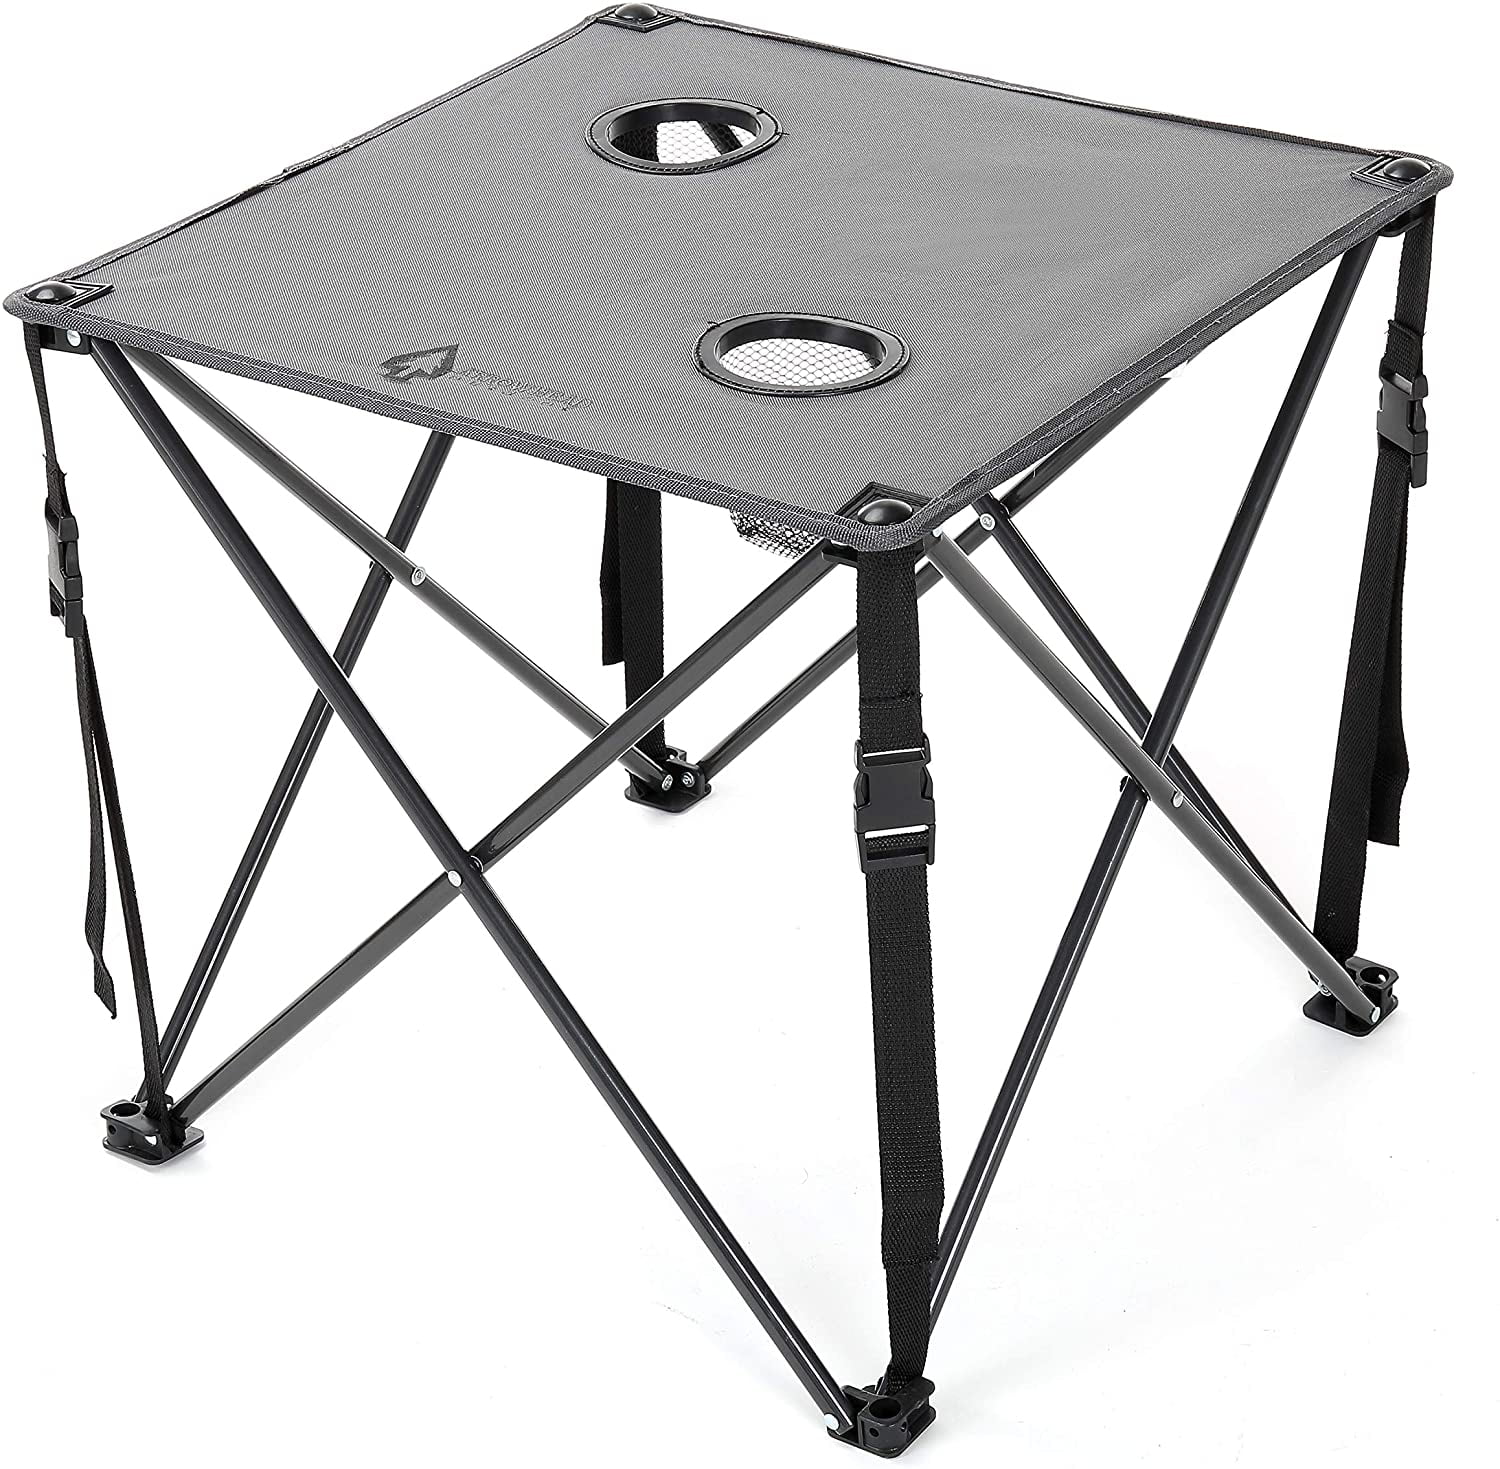 Arrowhead Outdoor Heavy-Duty Portable Camping Folding Table, Carrying ...